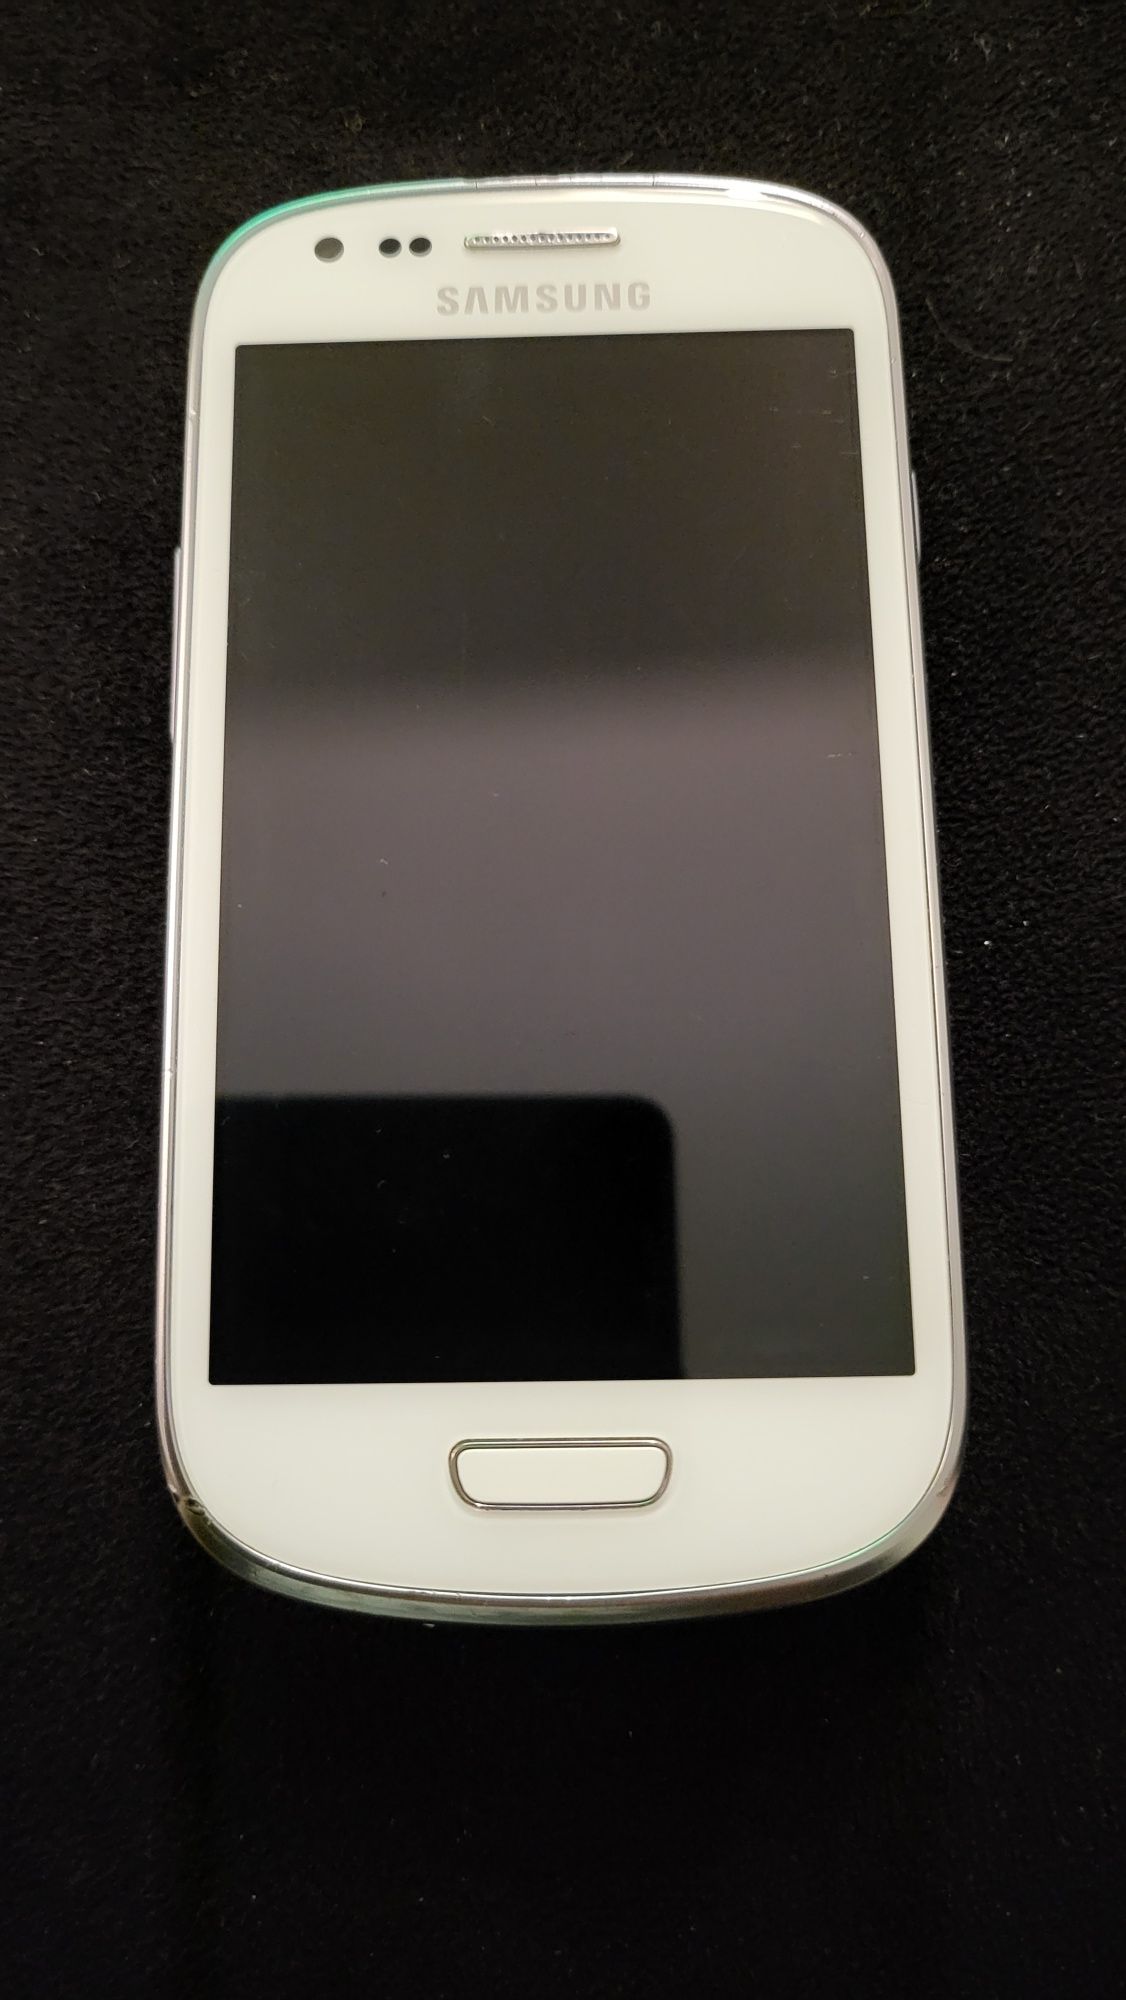 Samsung S3 III mini oryginalny sprawny komplet